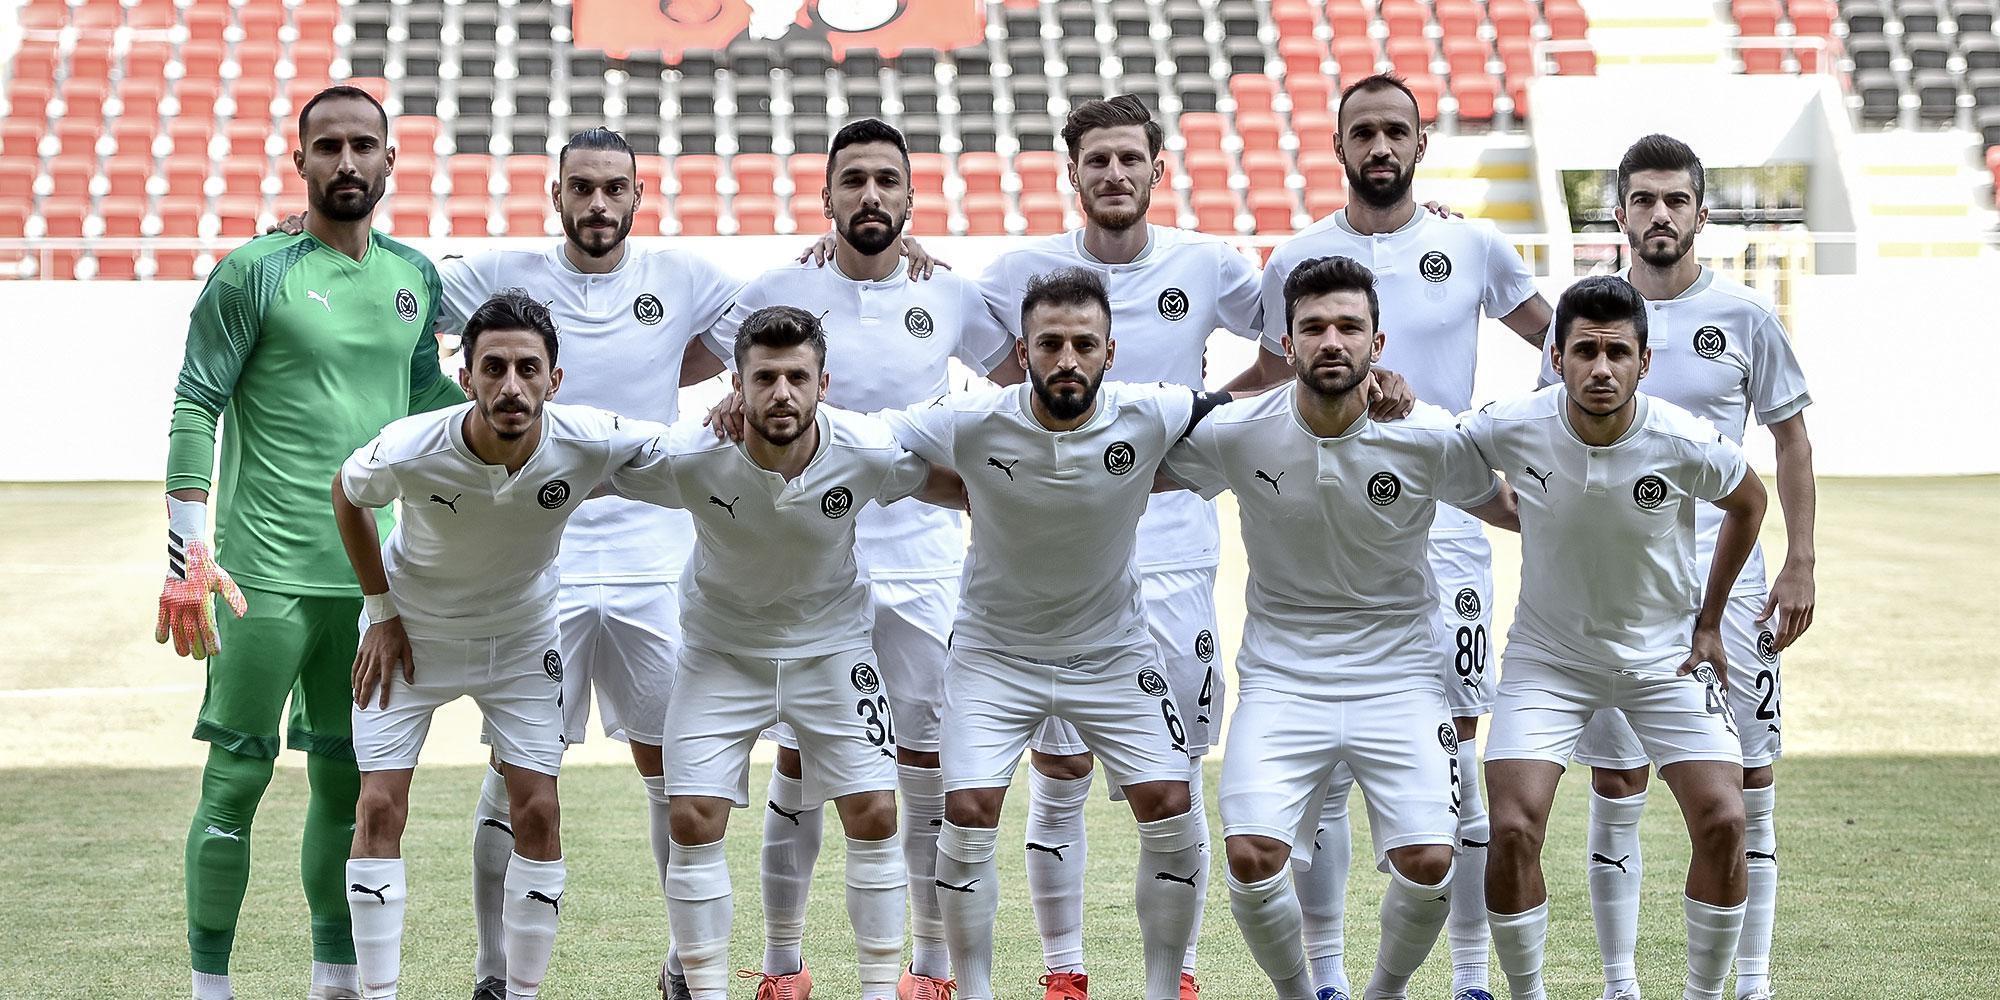 Manisa Futbol Kulübünün dinamosu Emir Alagöz